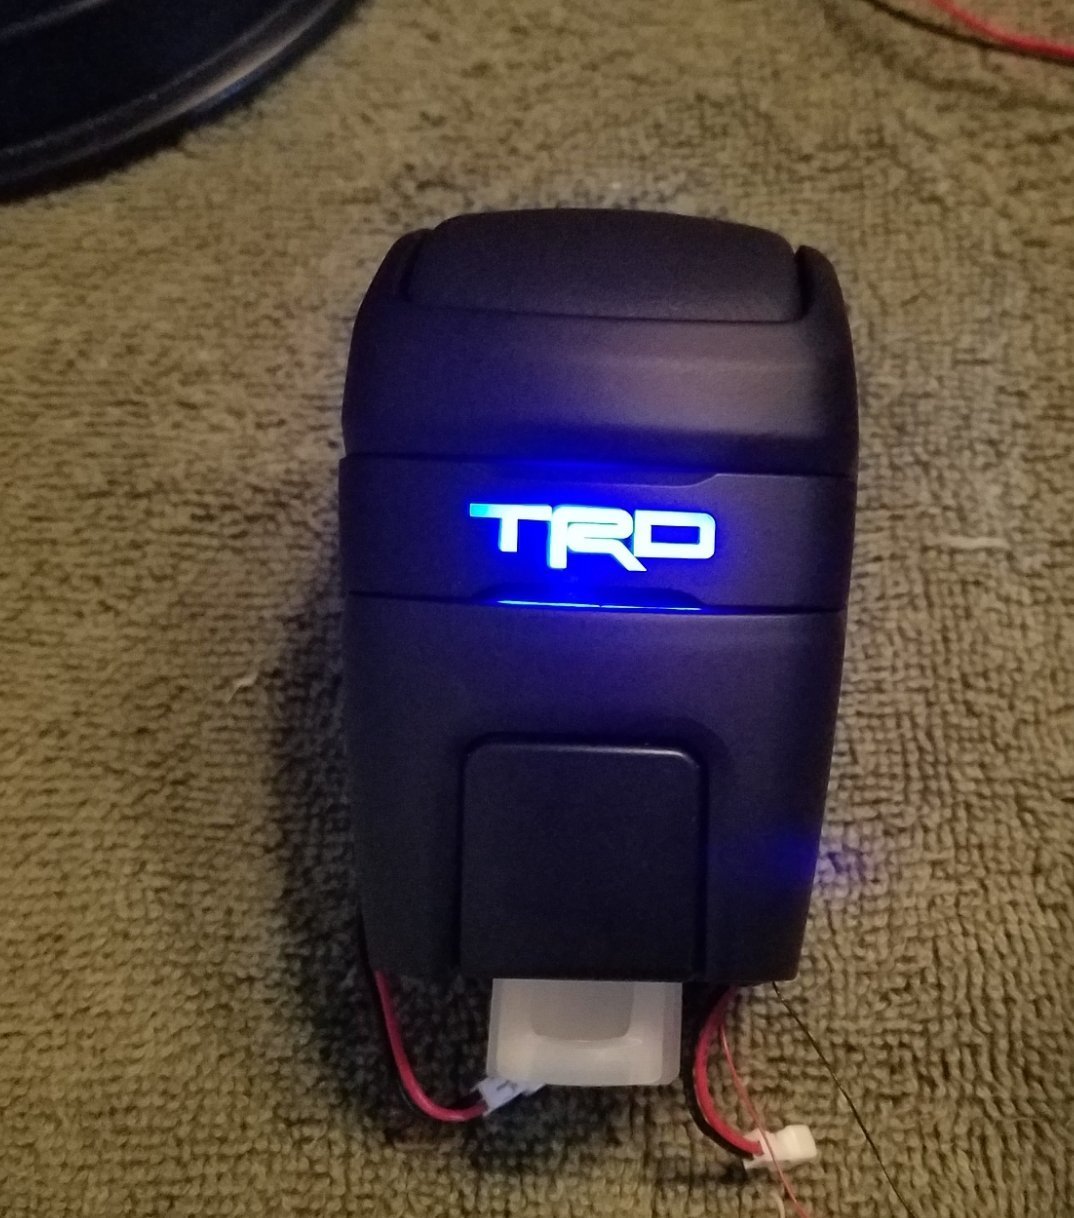 TRD LED shift knob.jpg